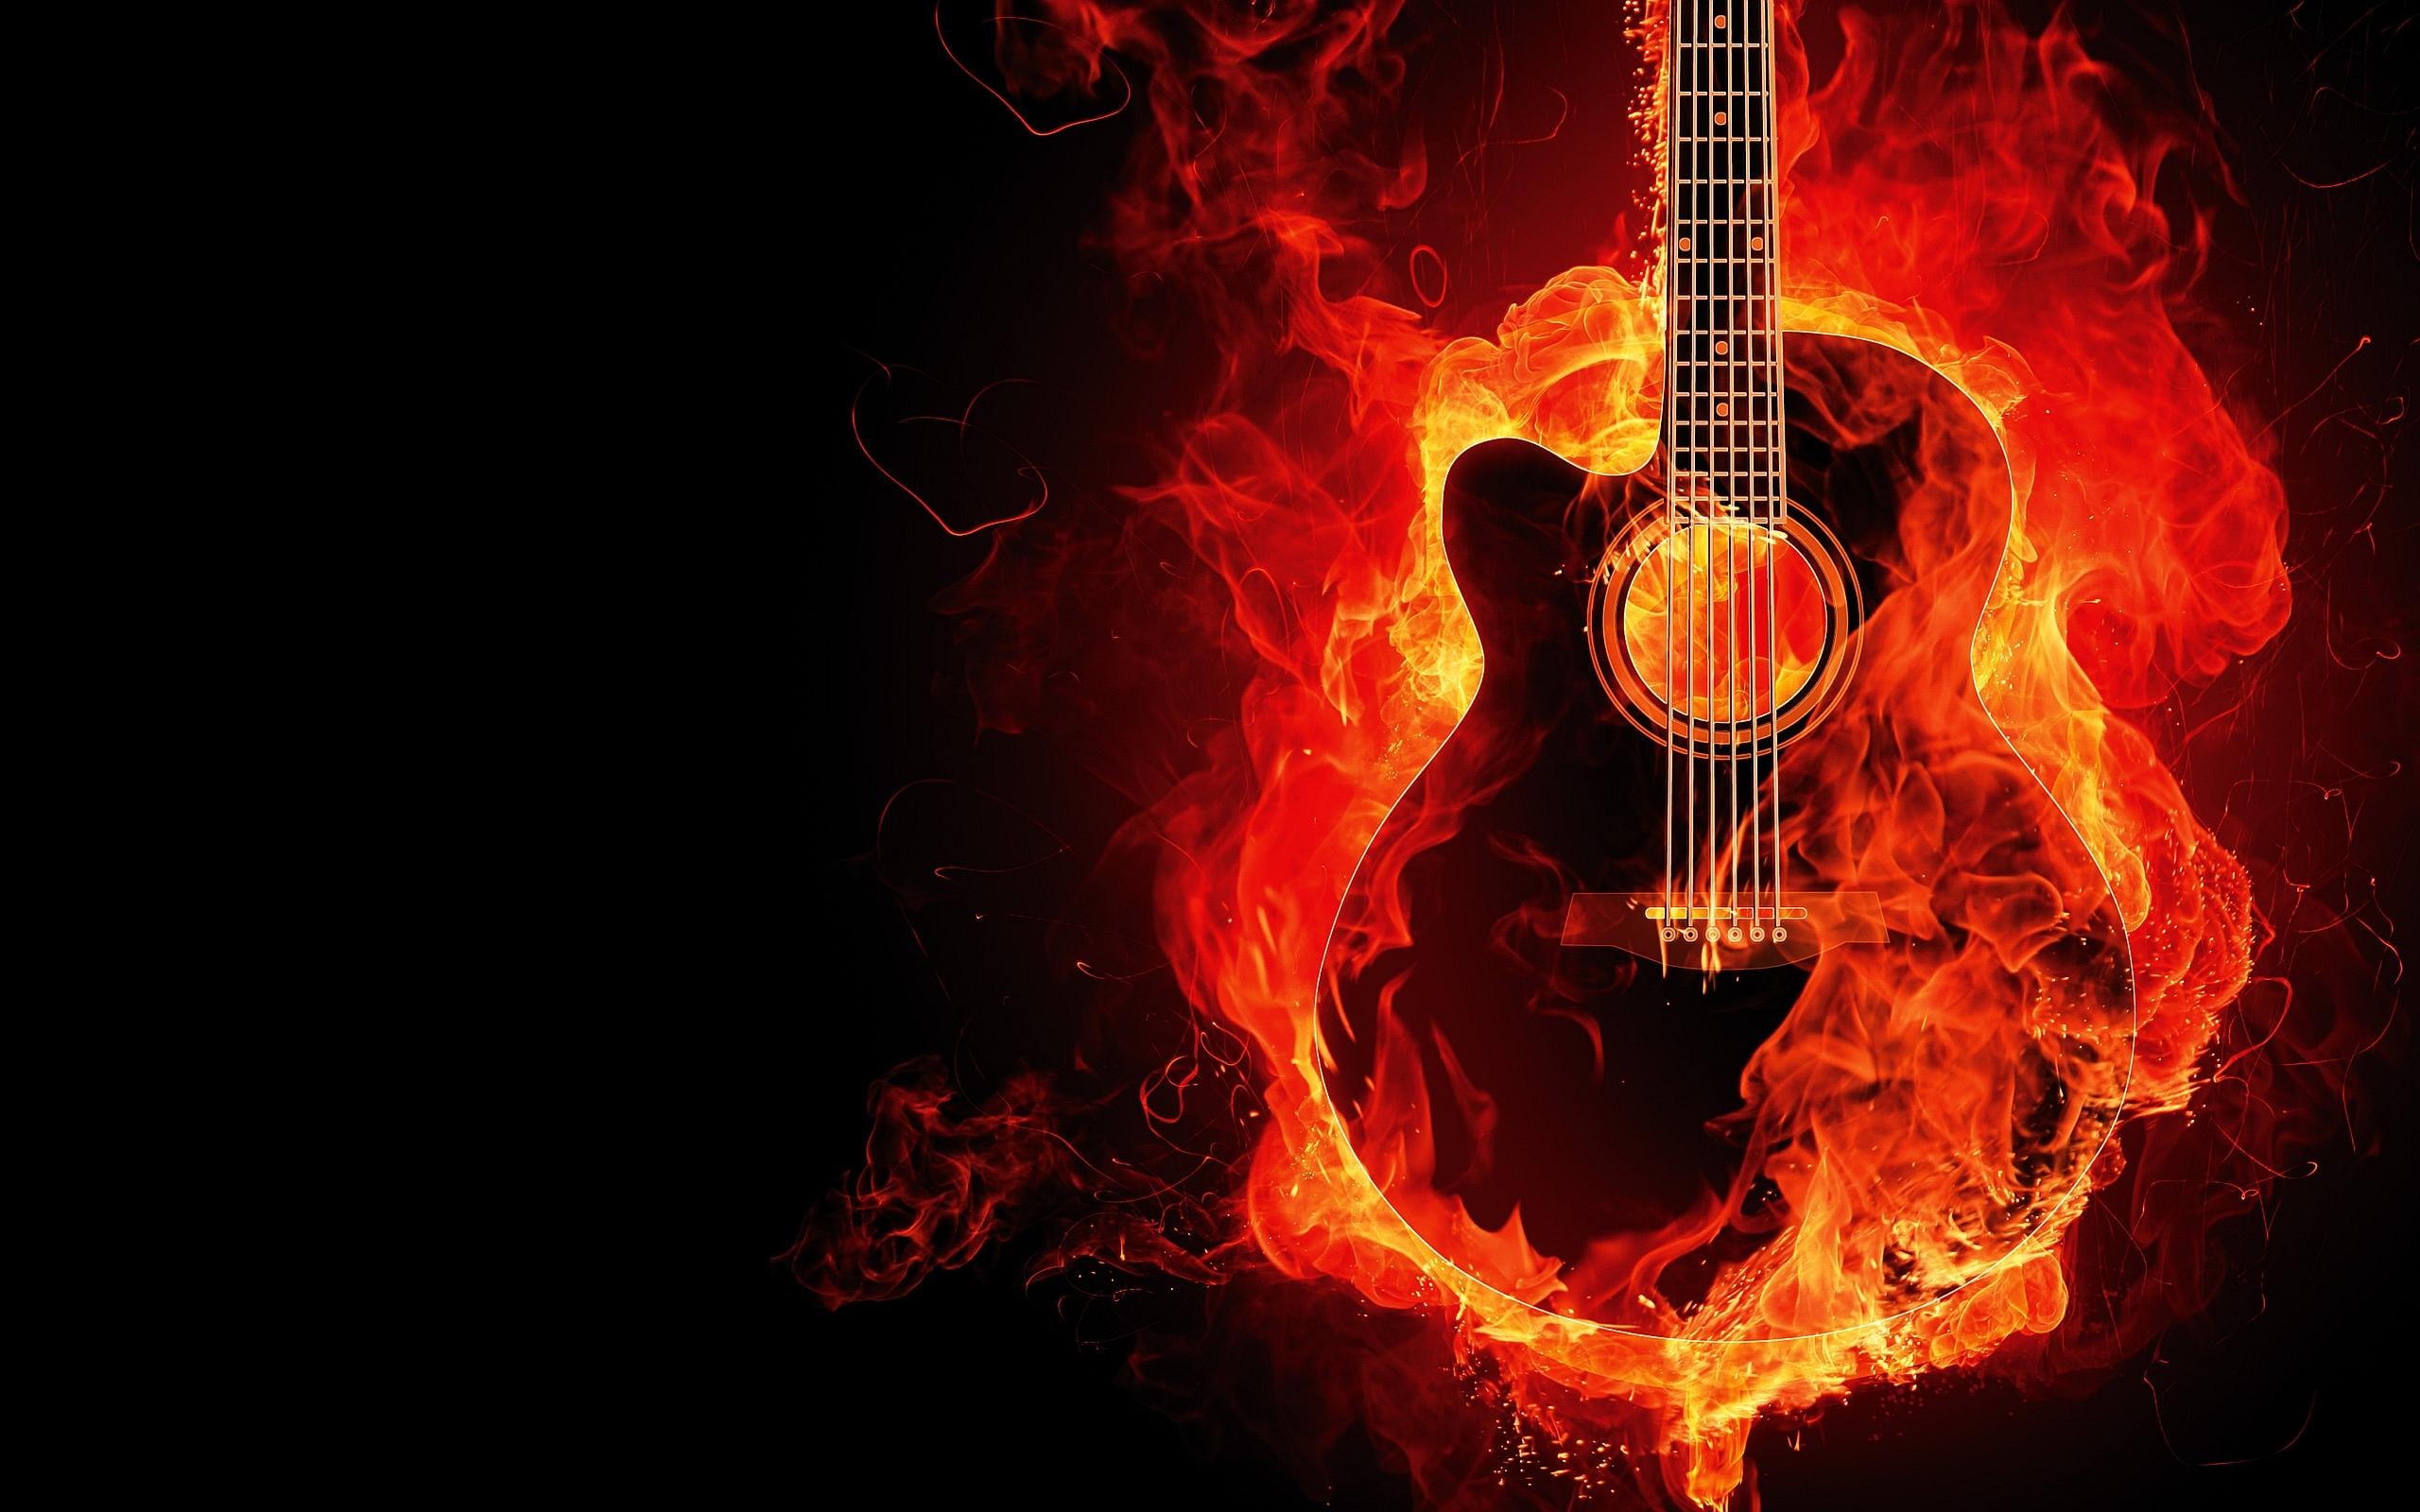 A guitar on fire